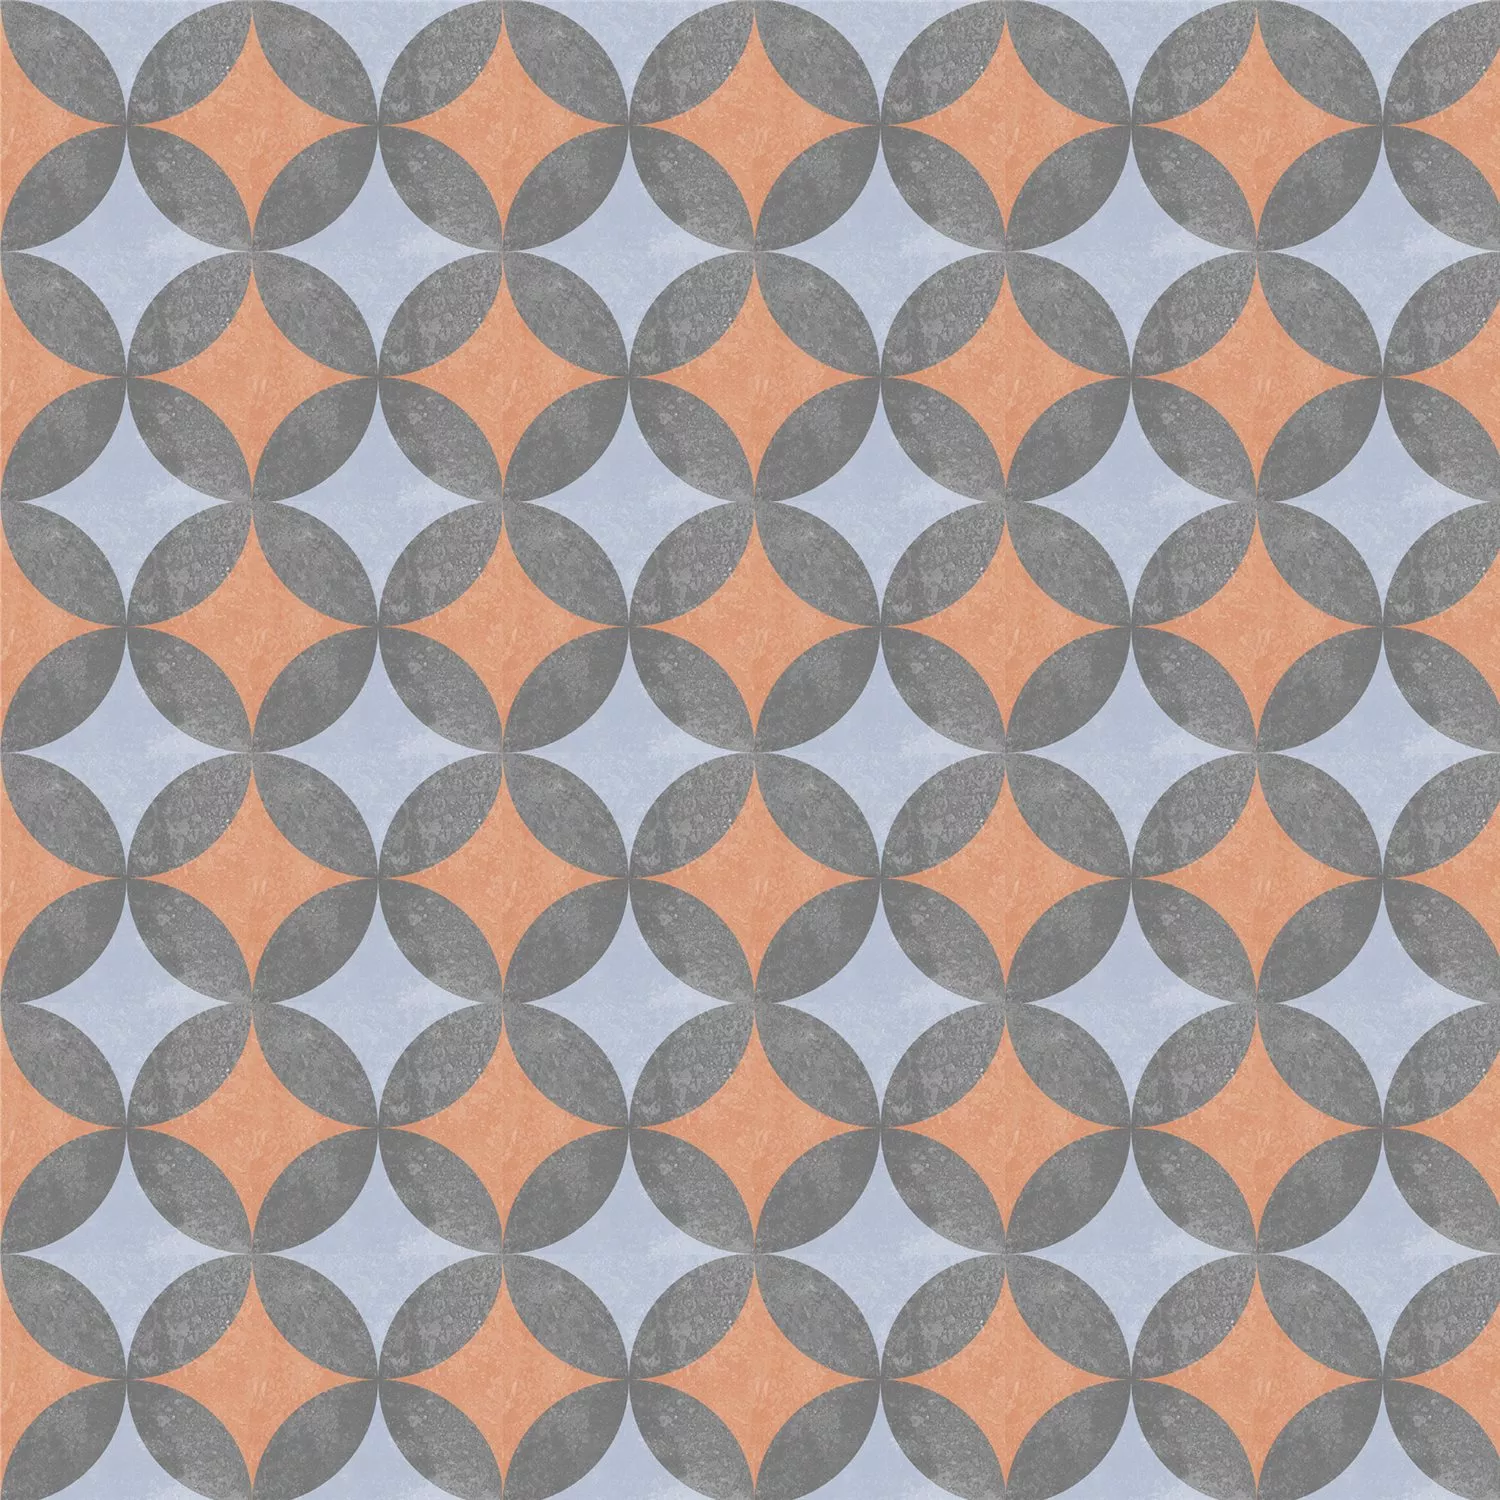 Sample Cement Tiles Retro Optic Gris Floor Tiles Cano 18,6x18,6cm